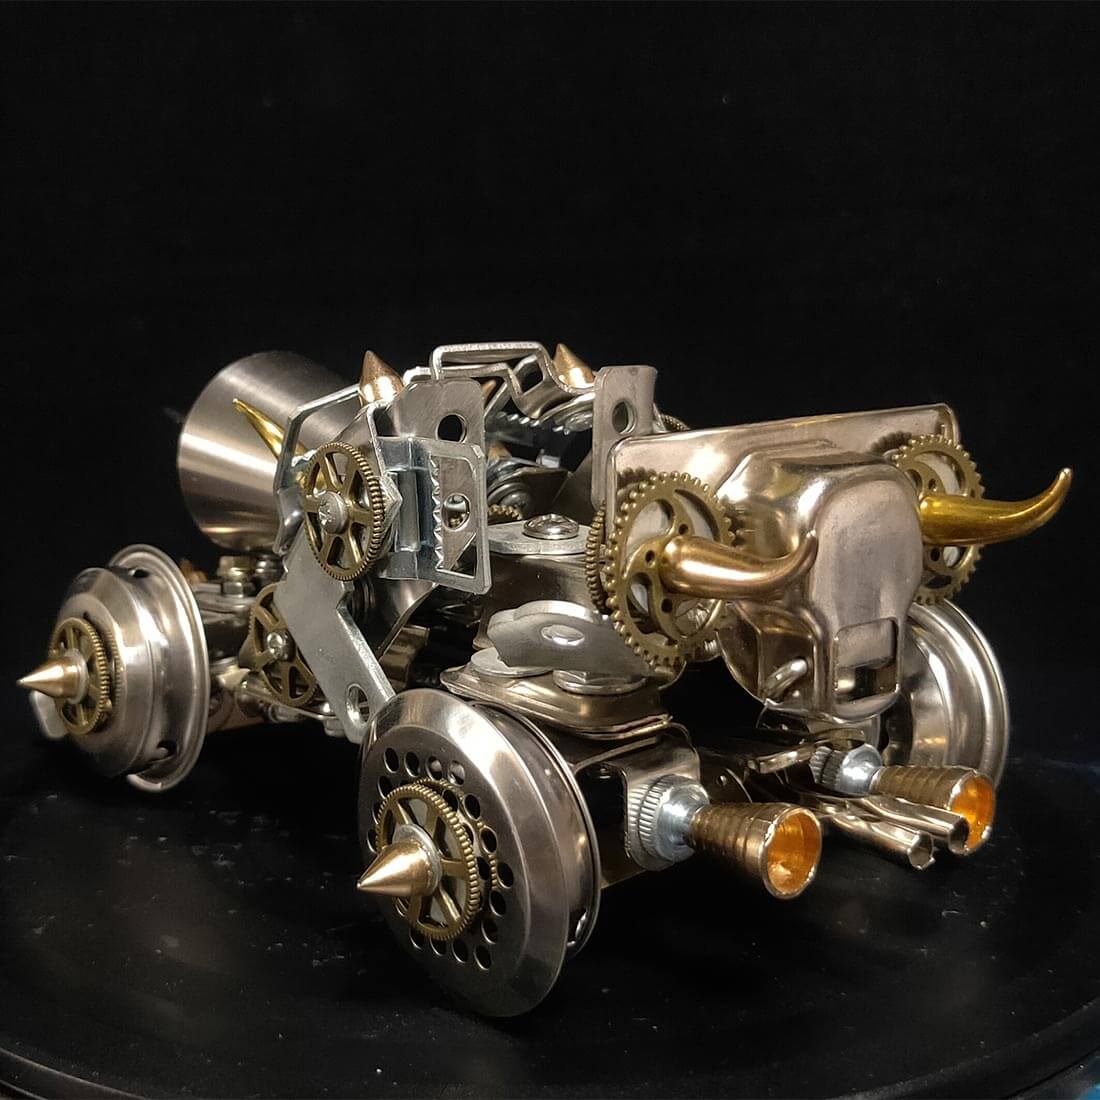 War Chariot Old Sports Car 3D Metal Model Assembly Kits